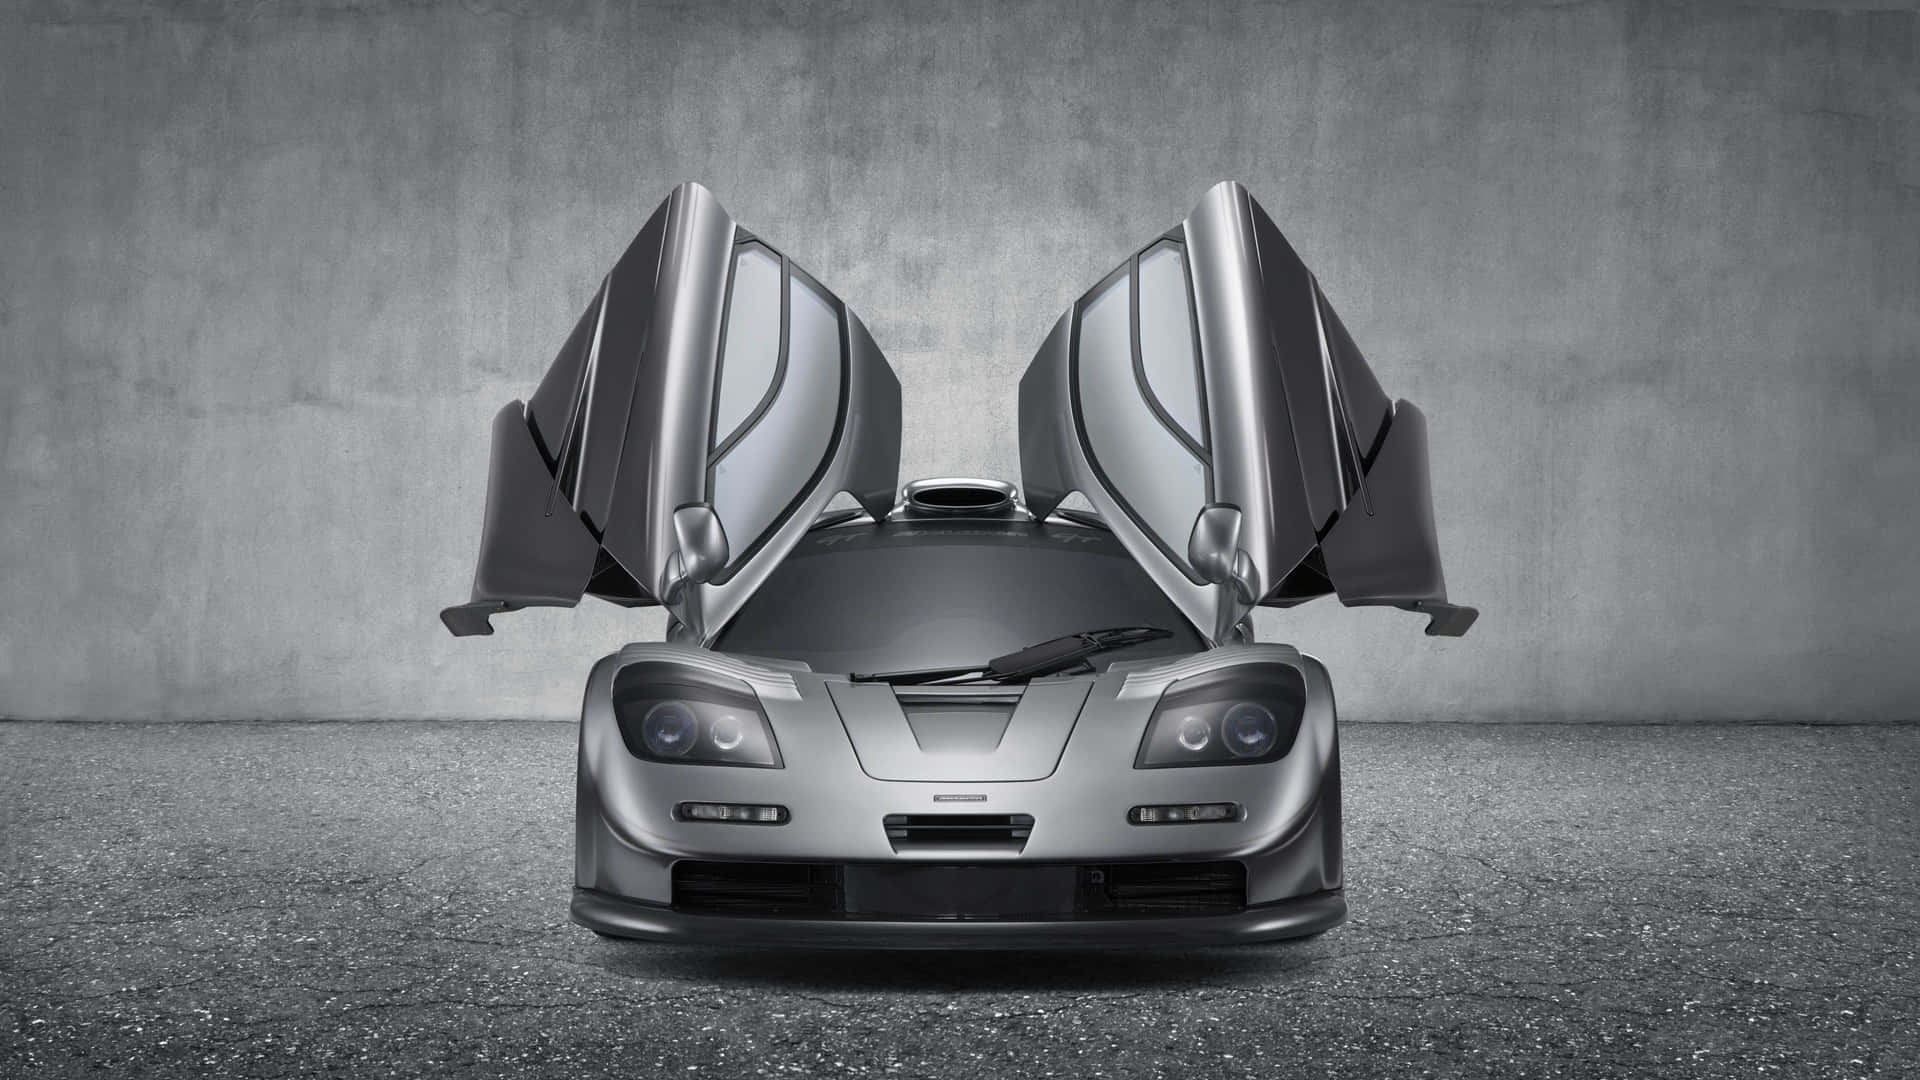 Sleek McLaren F1 Sports Car on Display in High Resolution Wallpaper